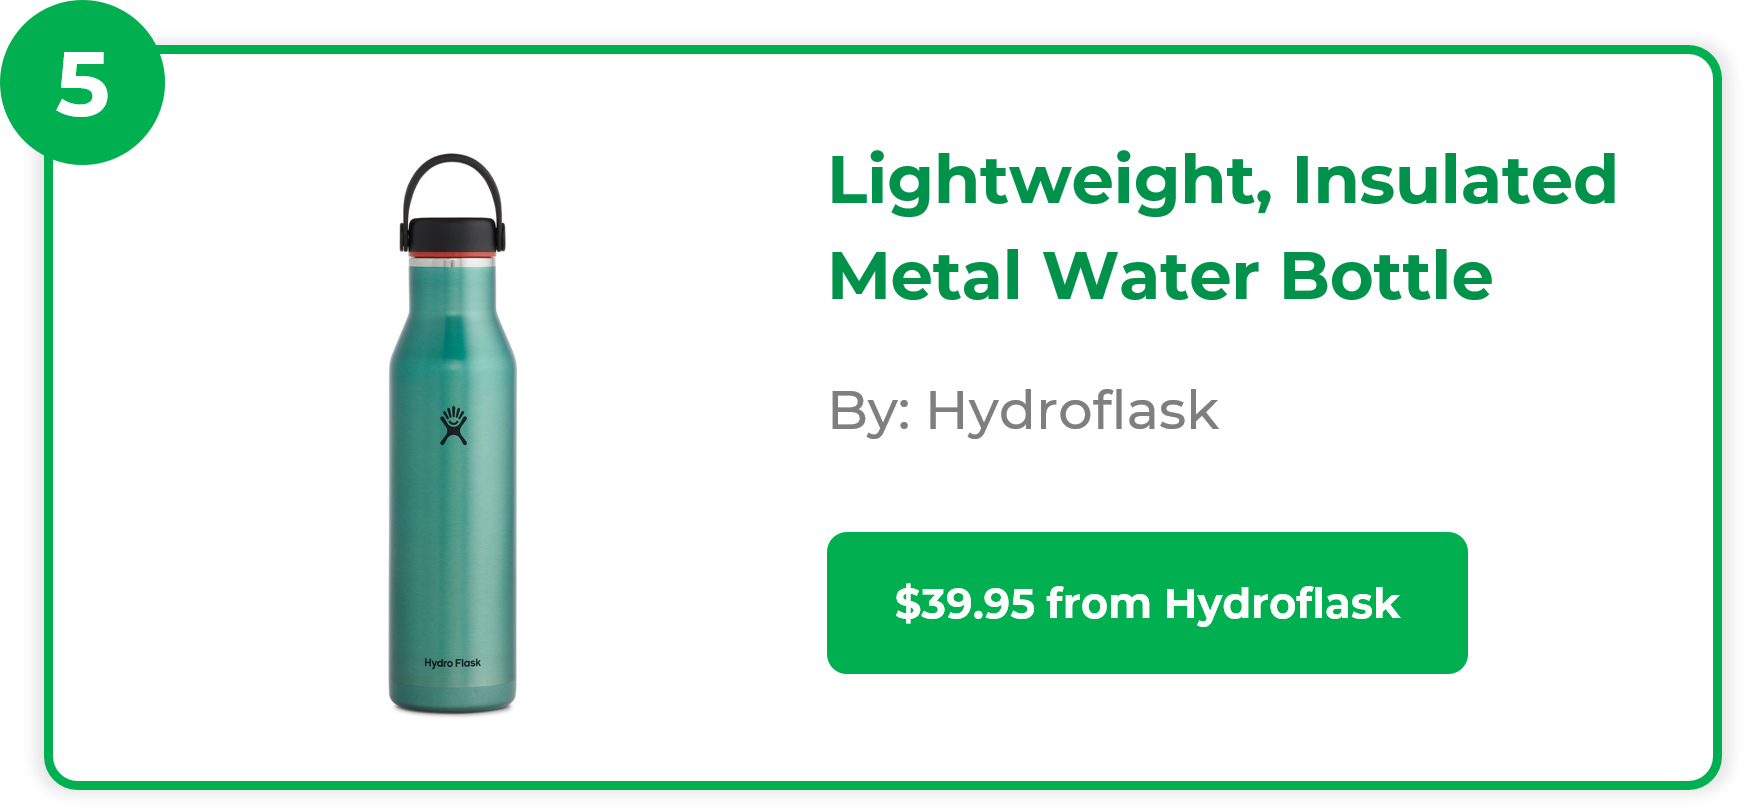 Lightweight Insulated Metal Water Bottle - Hydroflask